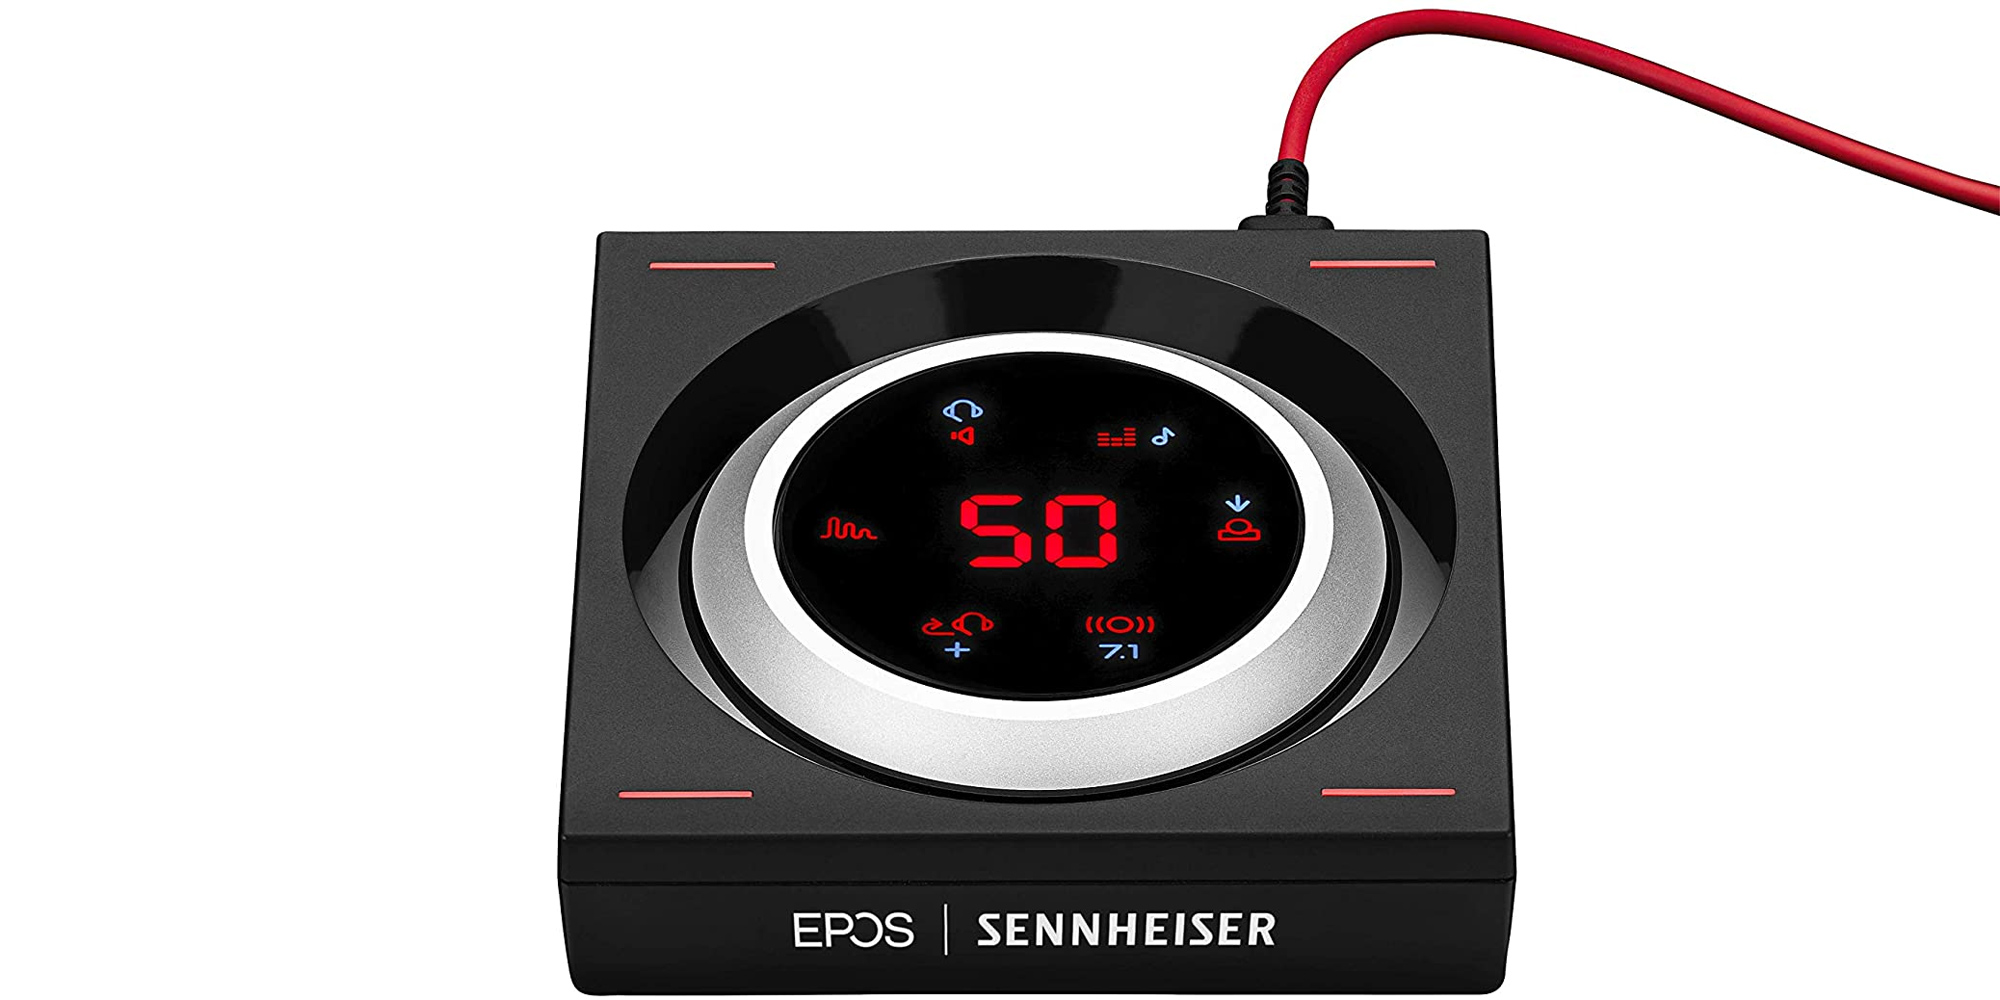 Sennheiser GSX 1000 gaming headphone amp/sound card at new low of